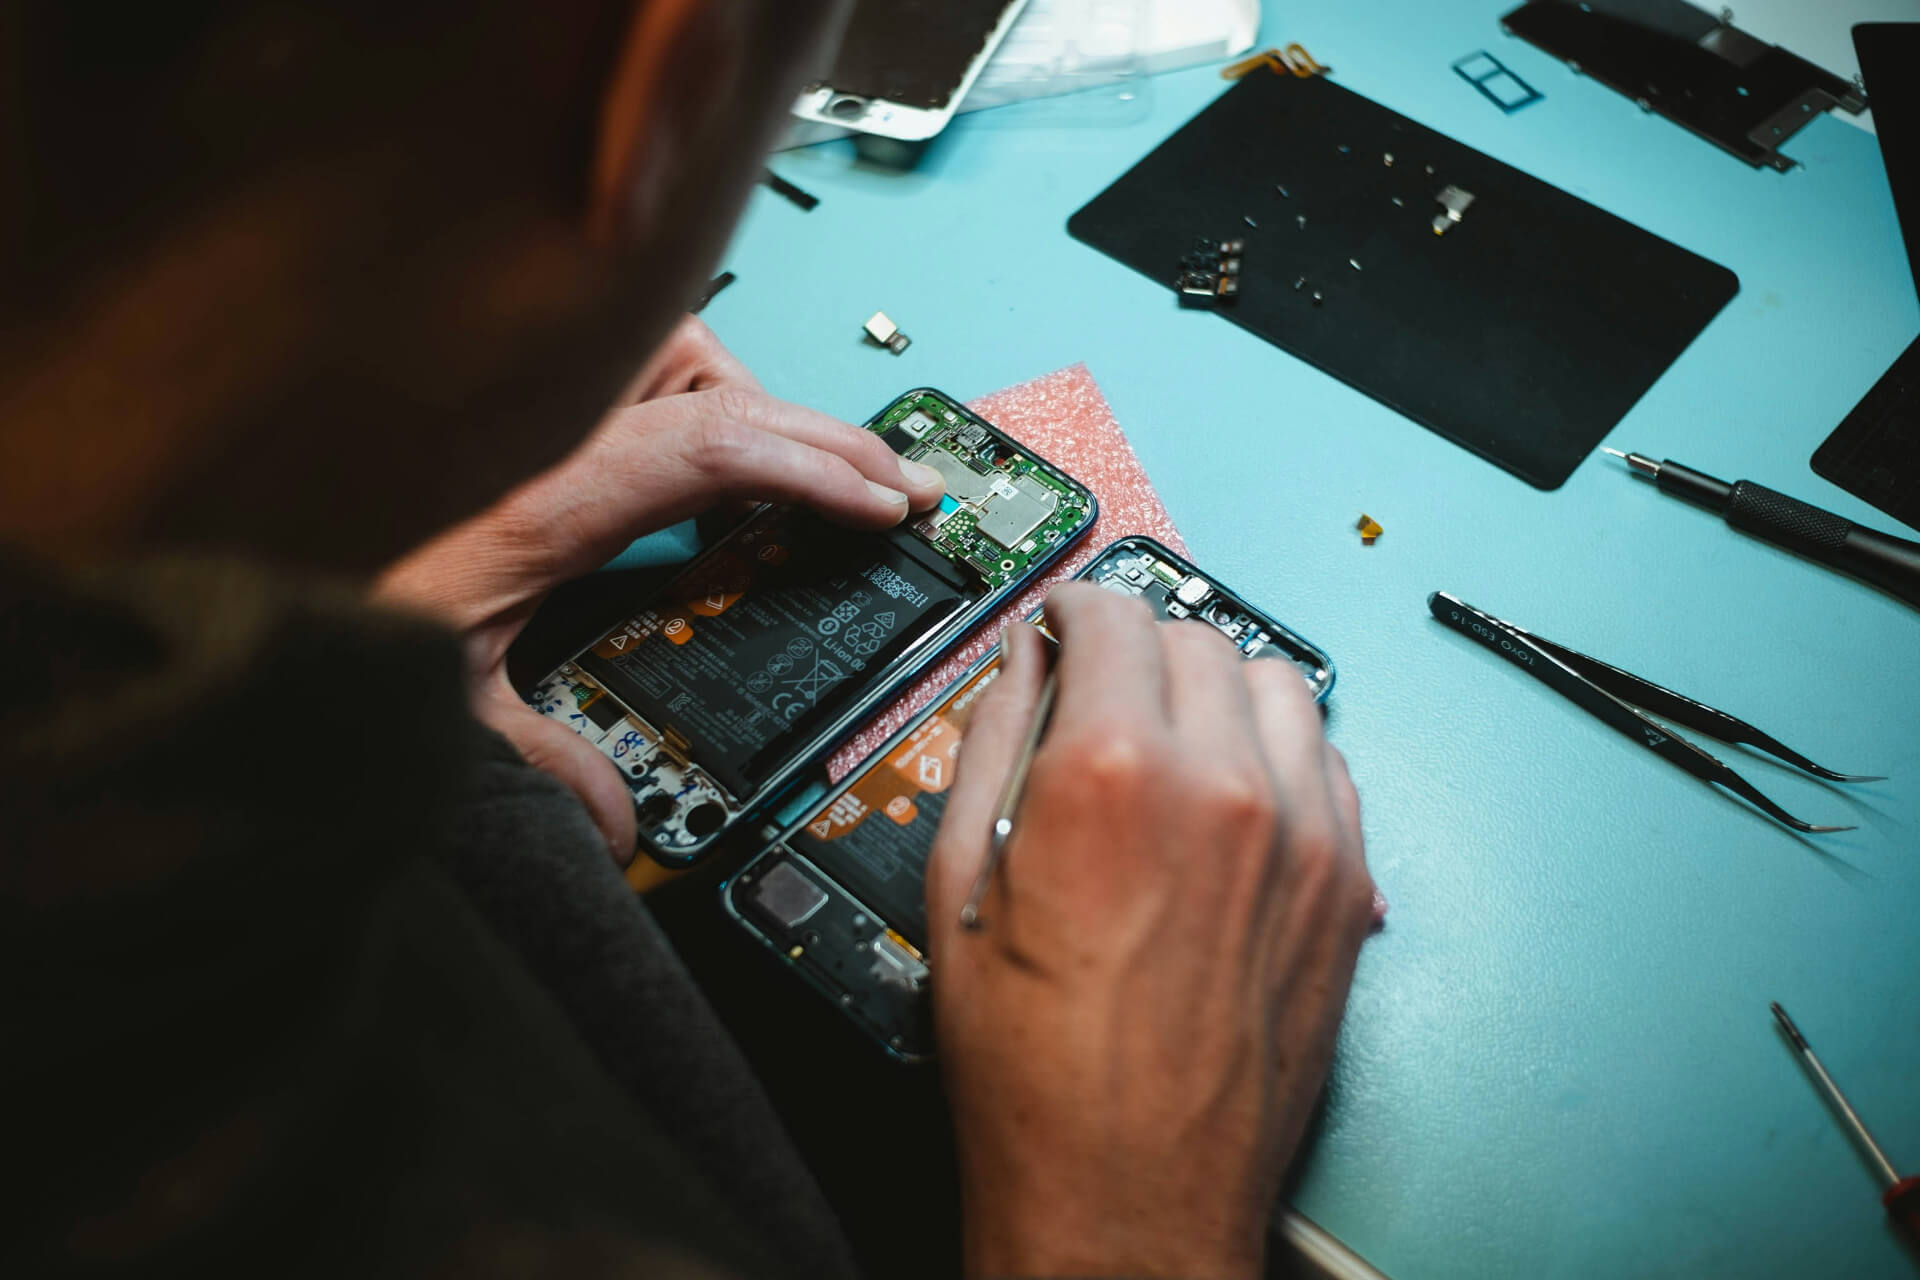 person repairing a phone